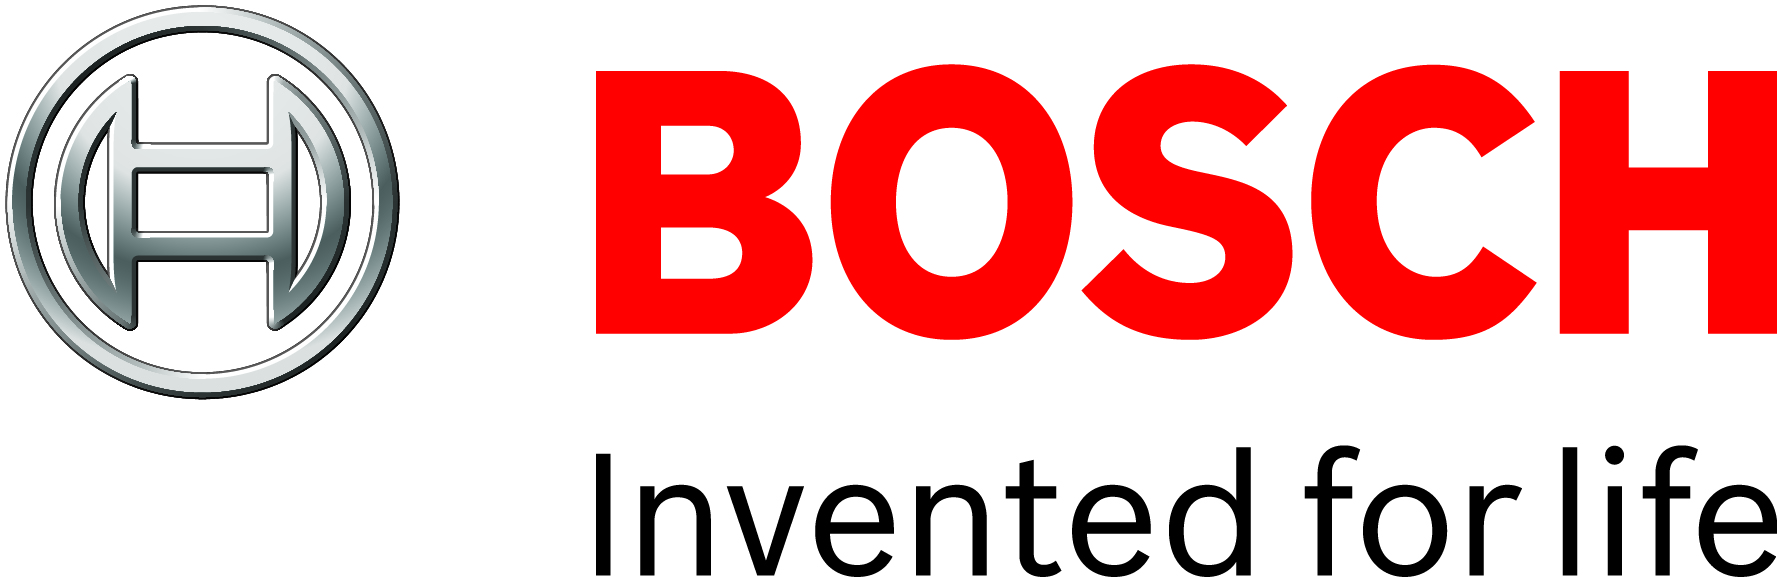 Bosch Thermotechnology Corp. company logo